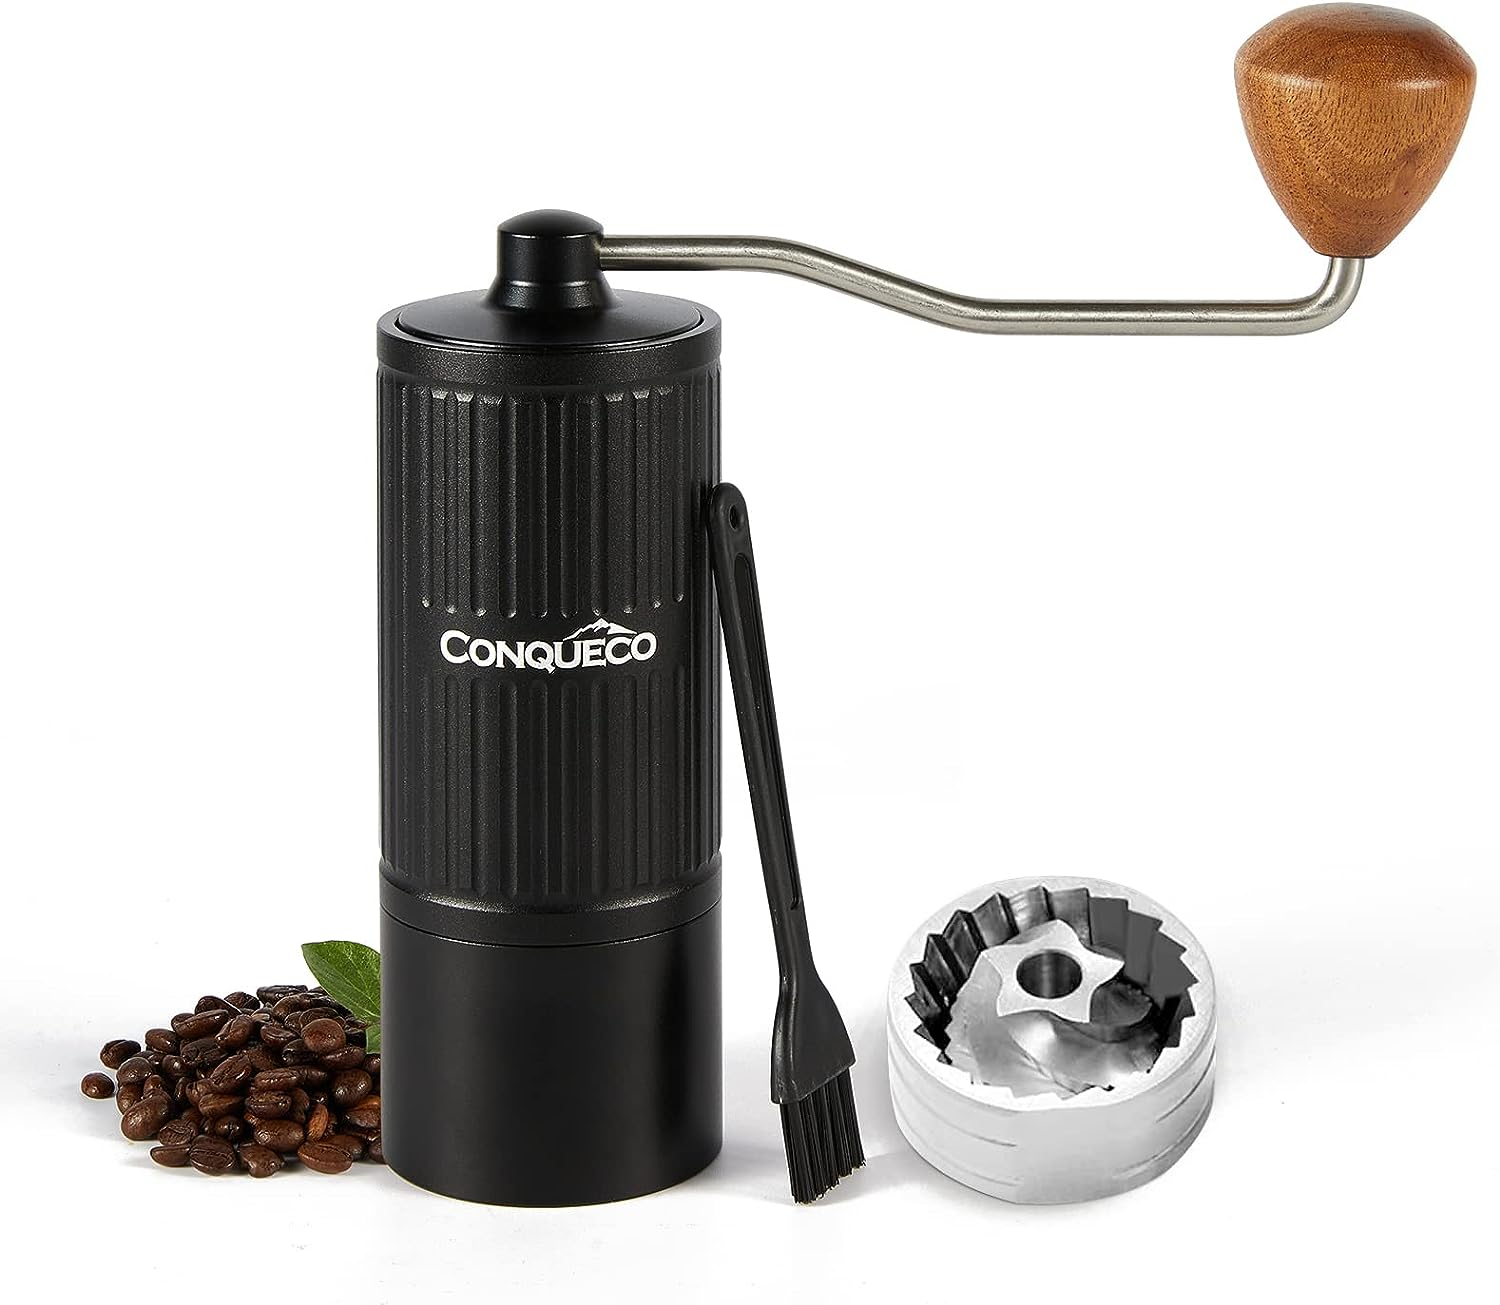 CONQUECO Coffee Grinder Manual Cone Grinder - Adjustable Grinding Level - Stainless Steel Hand Grinder (Black)